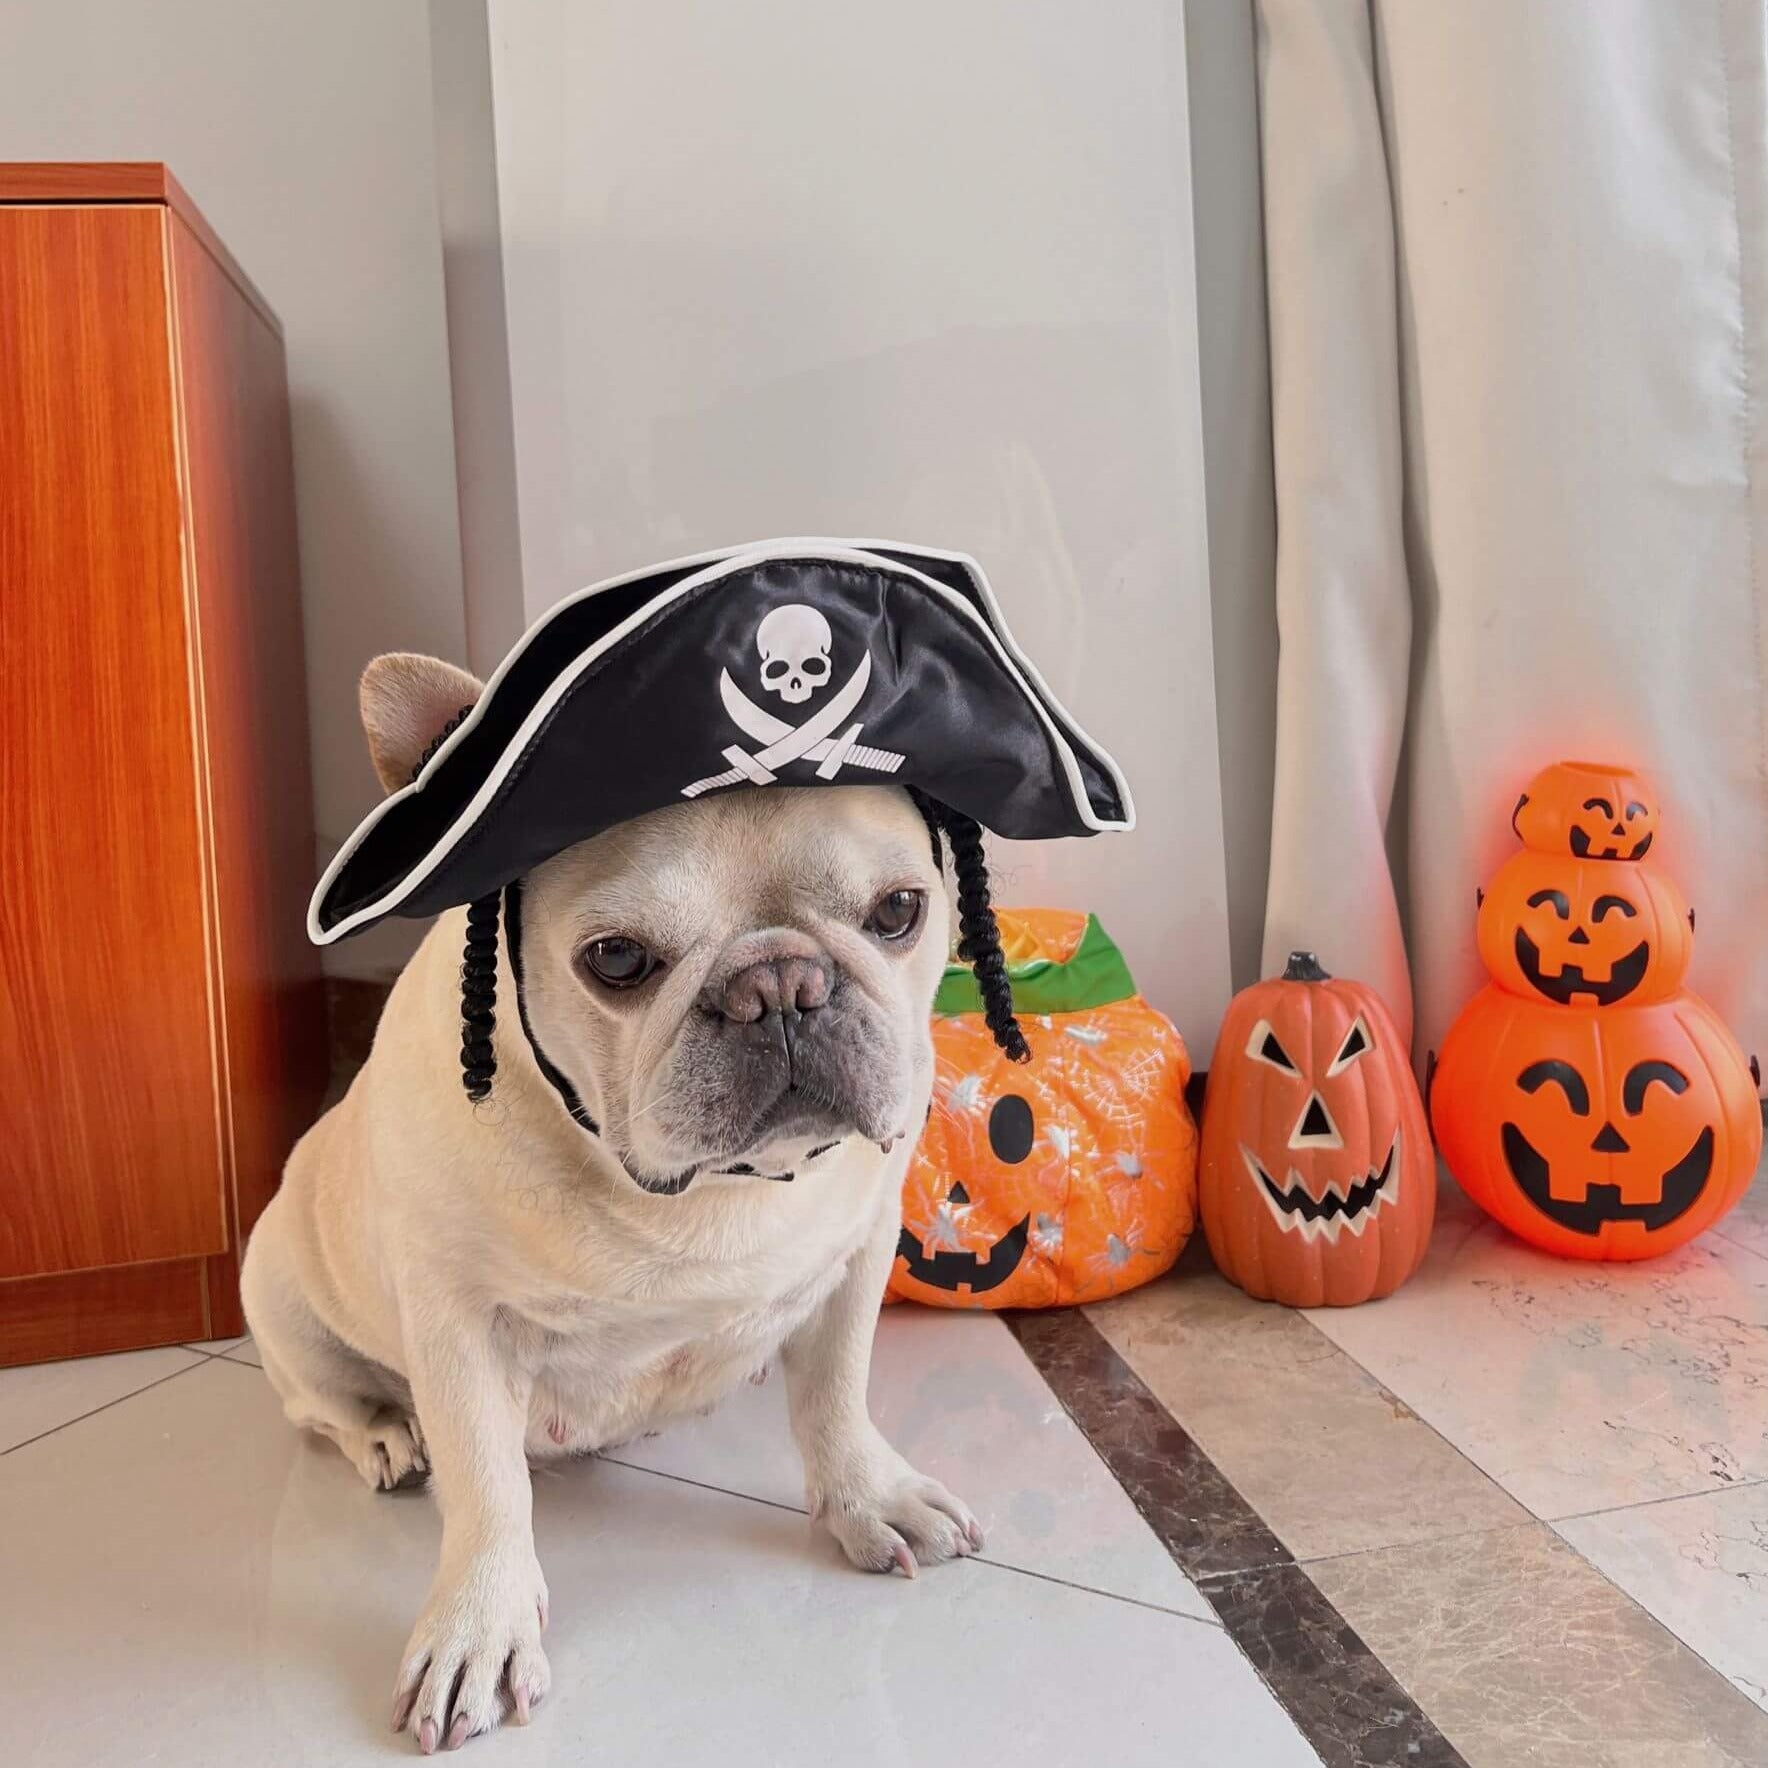 dog pirate costume carrying treasure